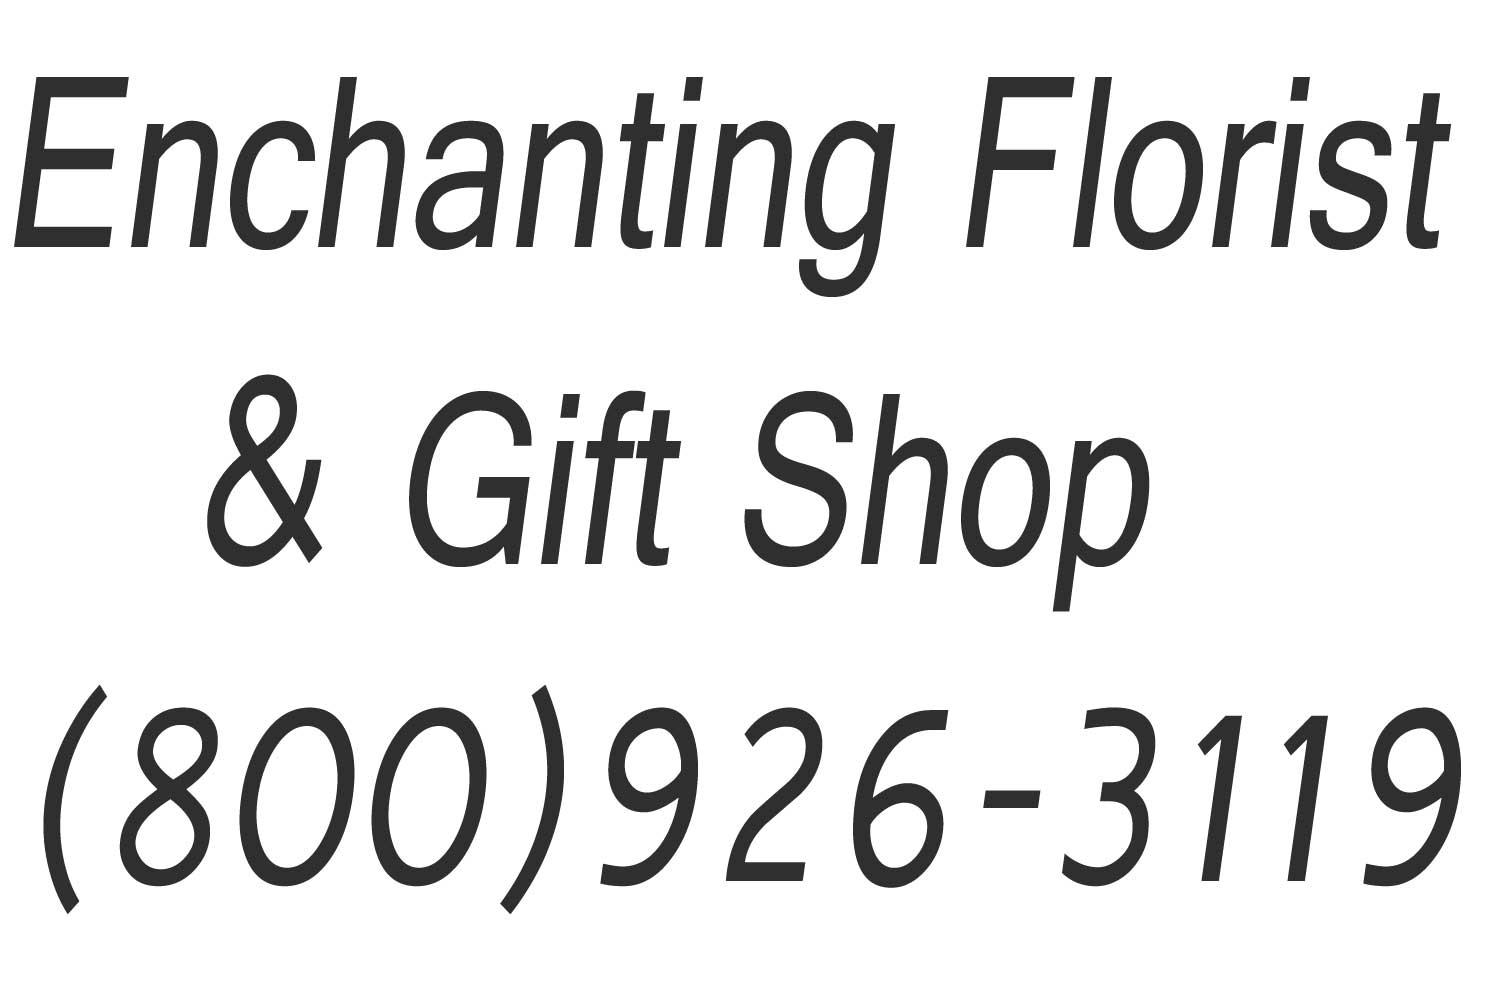 Enchanting Florist & Gift Shop - Woodbine, NJ 08270 - (609)628-4438 | ShowMeLocal.com